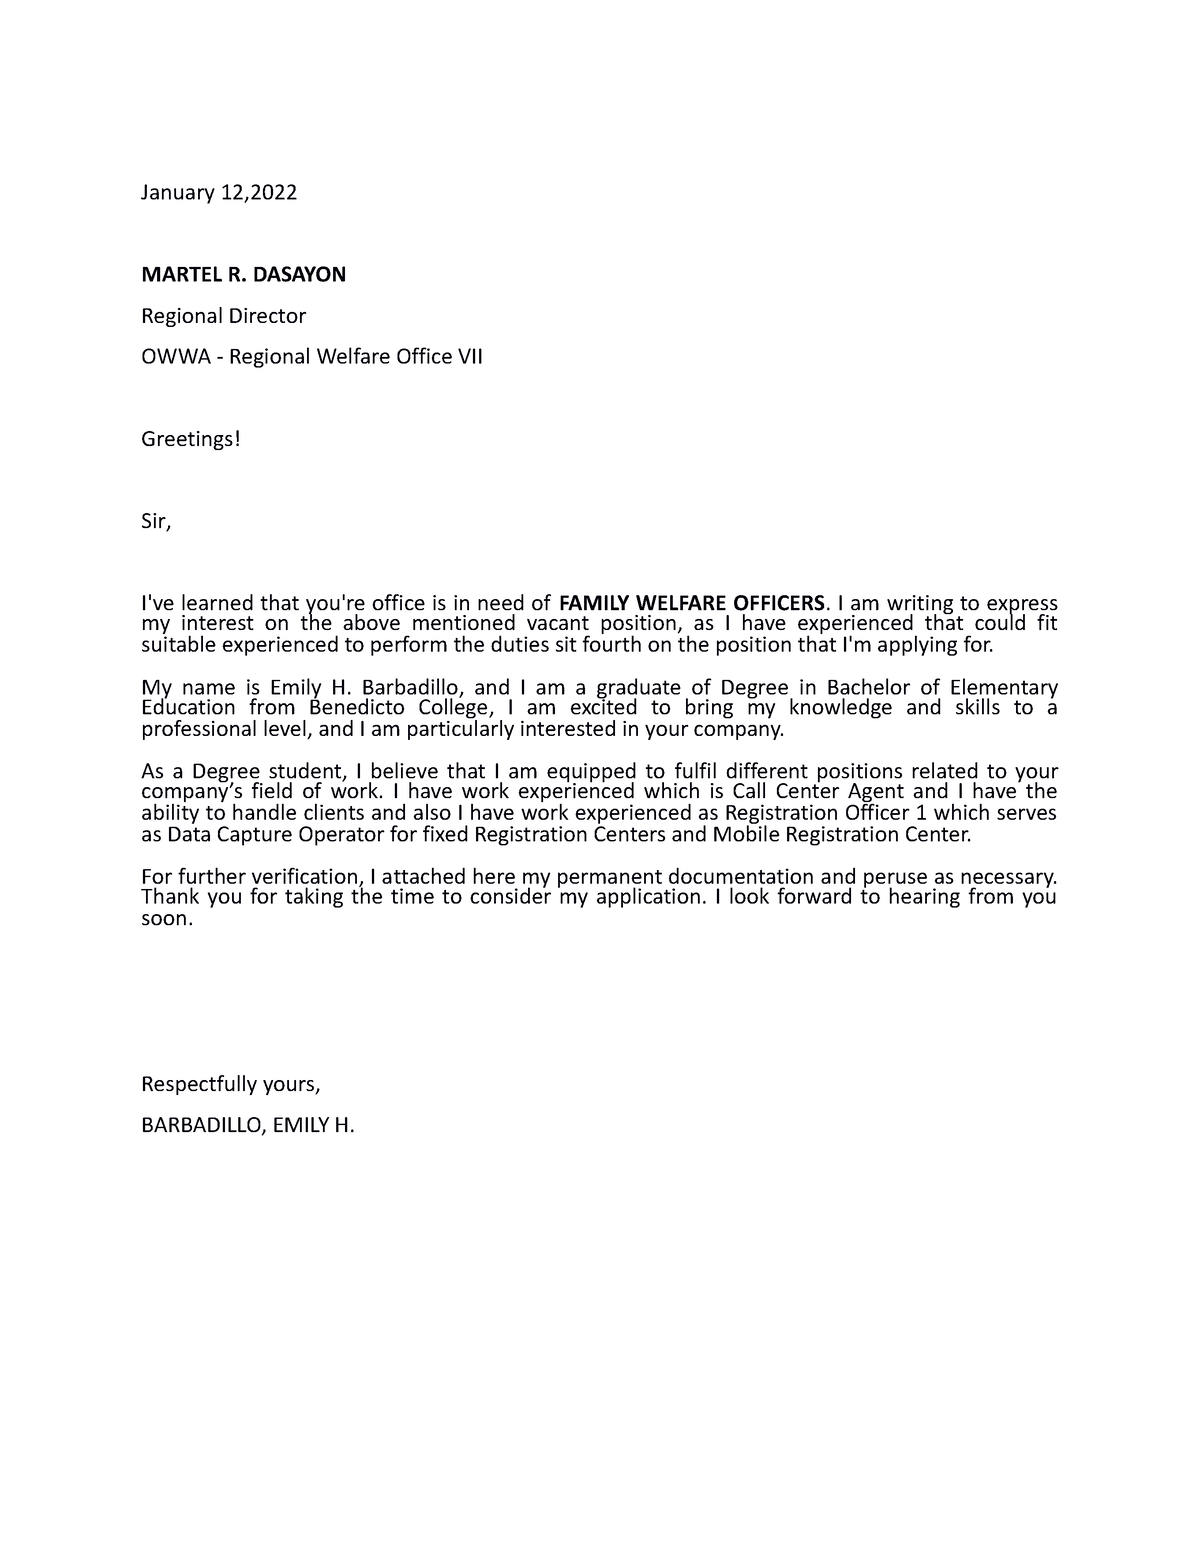 Application Letter (1) - January 12, MARTEL R. DASAYON Regional ...